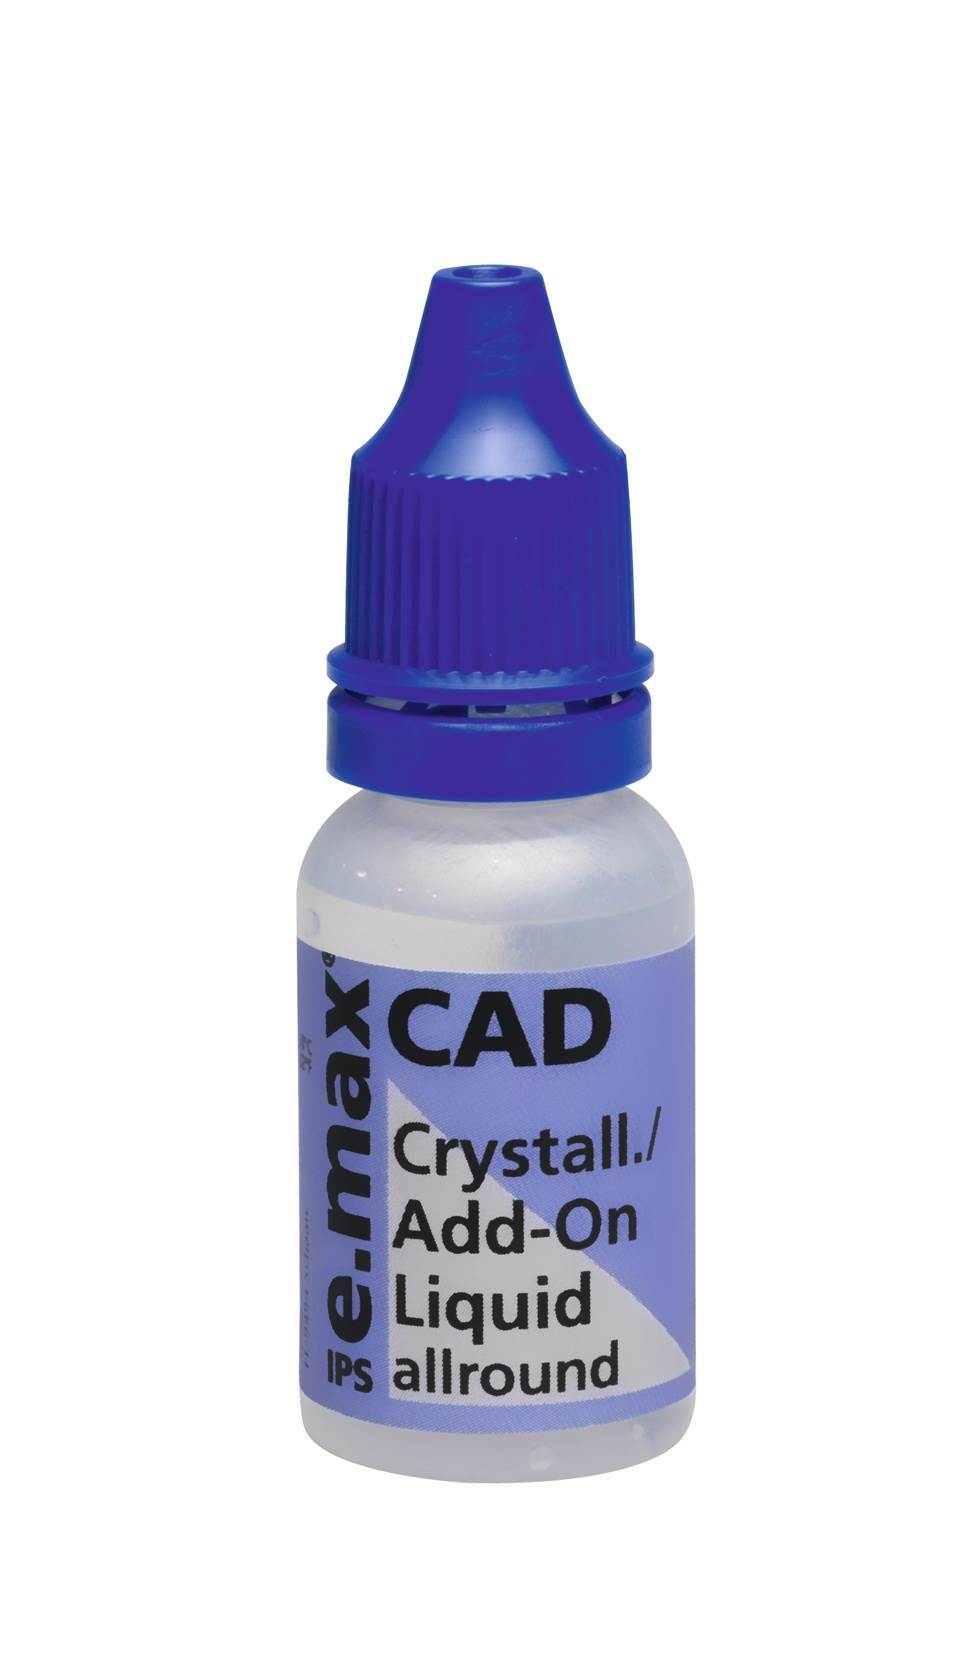 IPS e.max CAD Crystall./Add-On Liquid allround